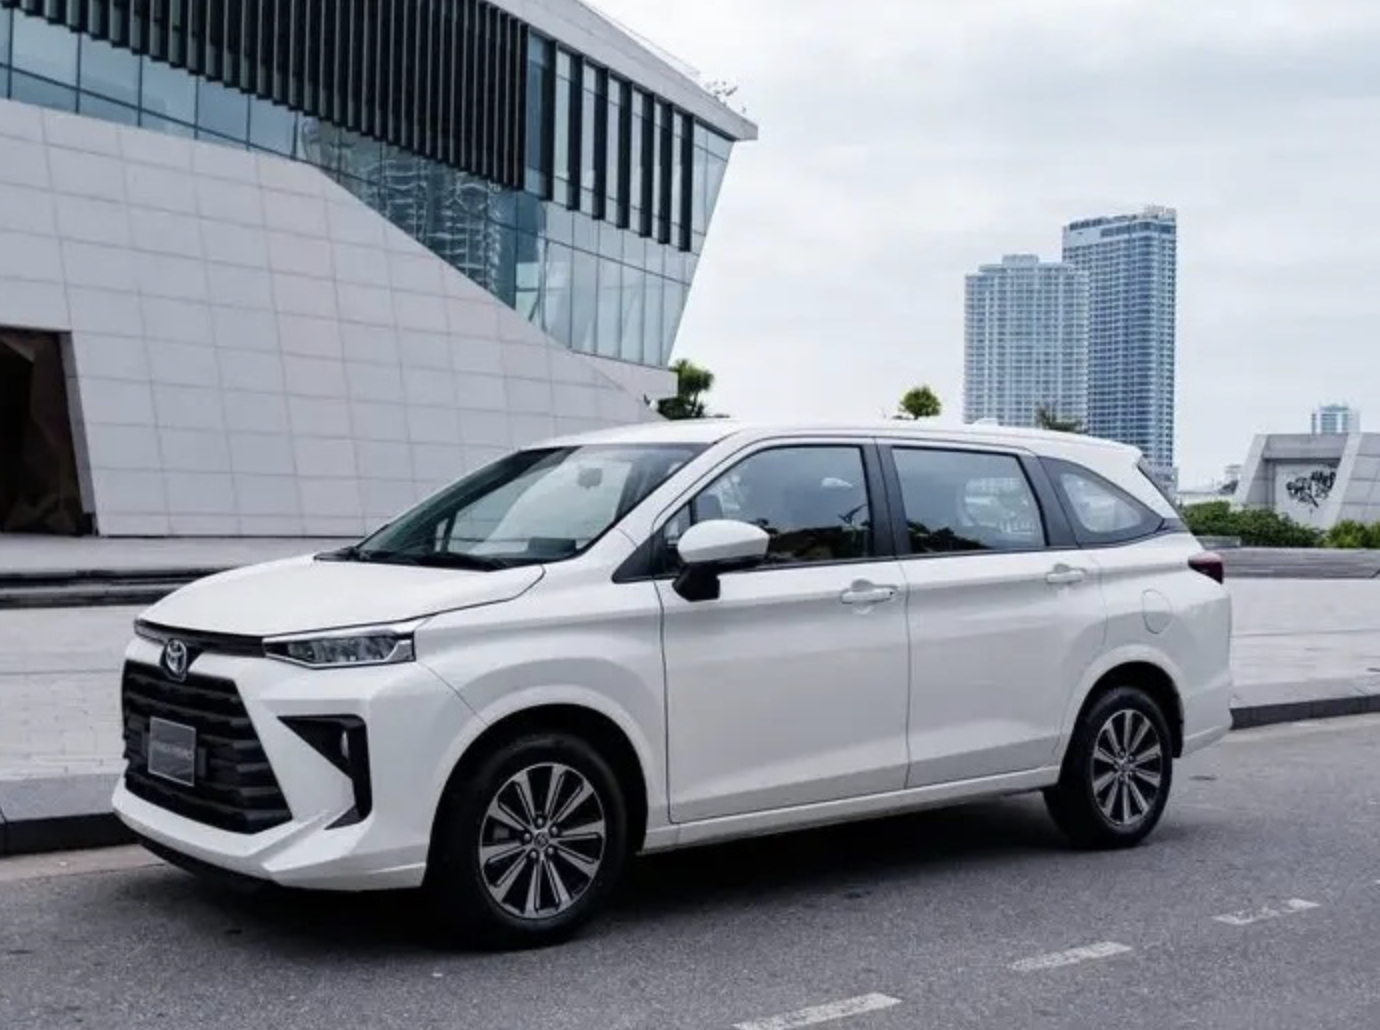 Toyota Avanza MT cars return to Vietnamese market